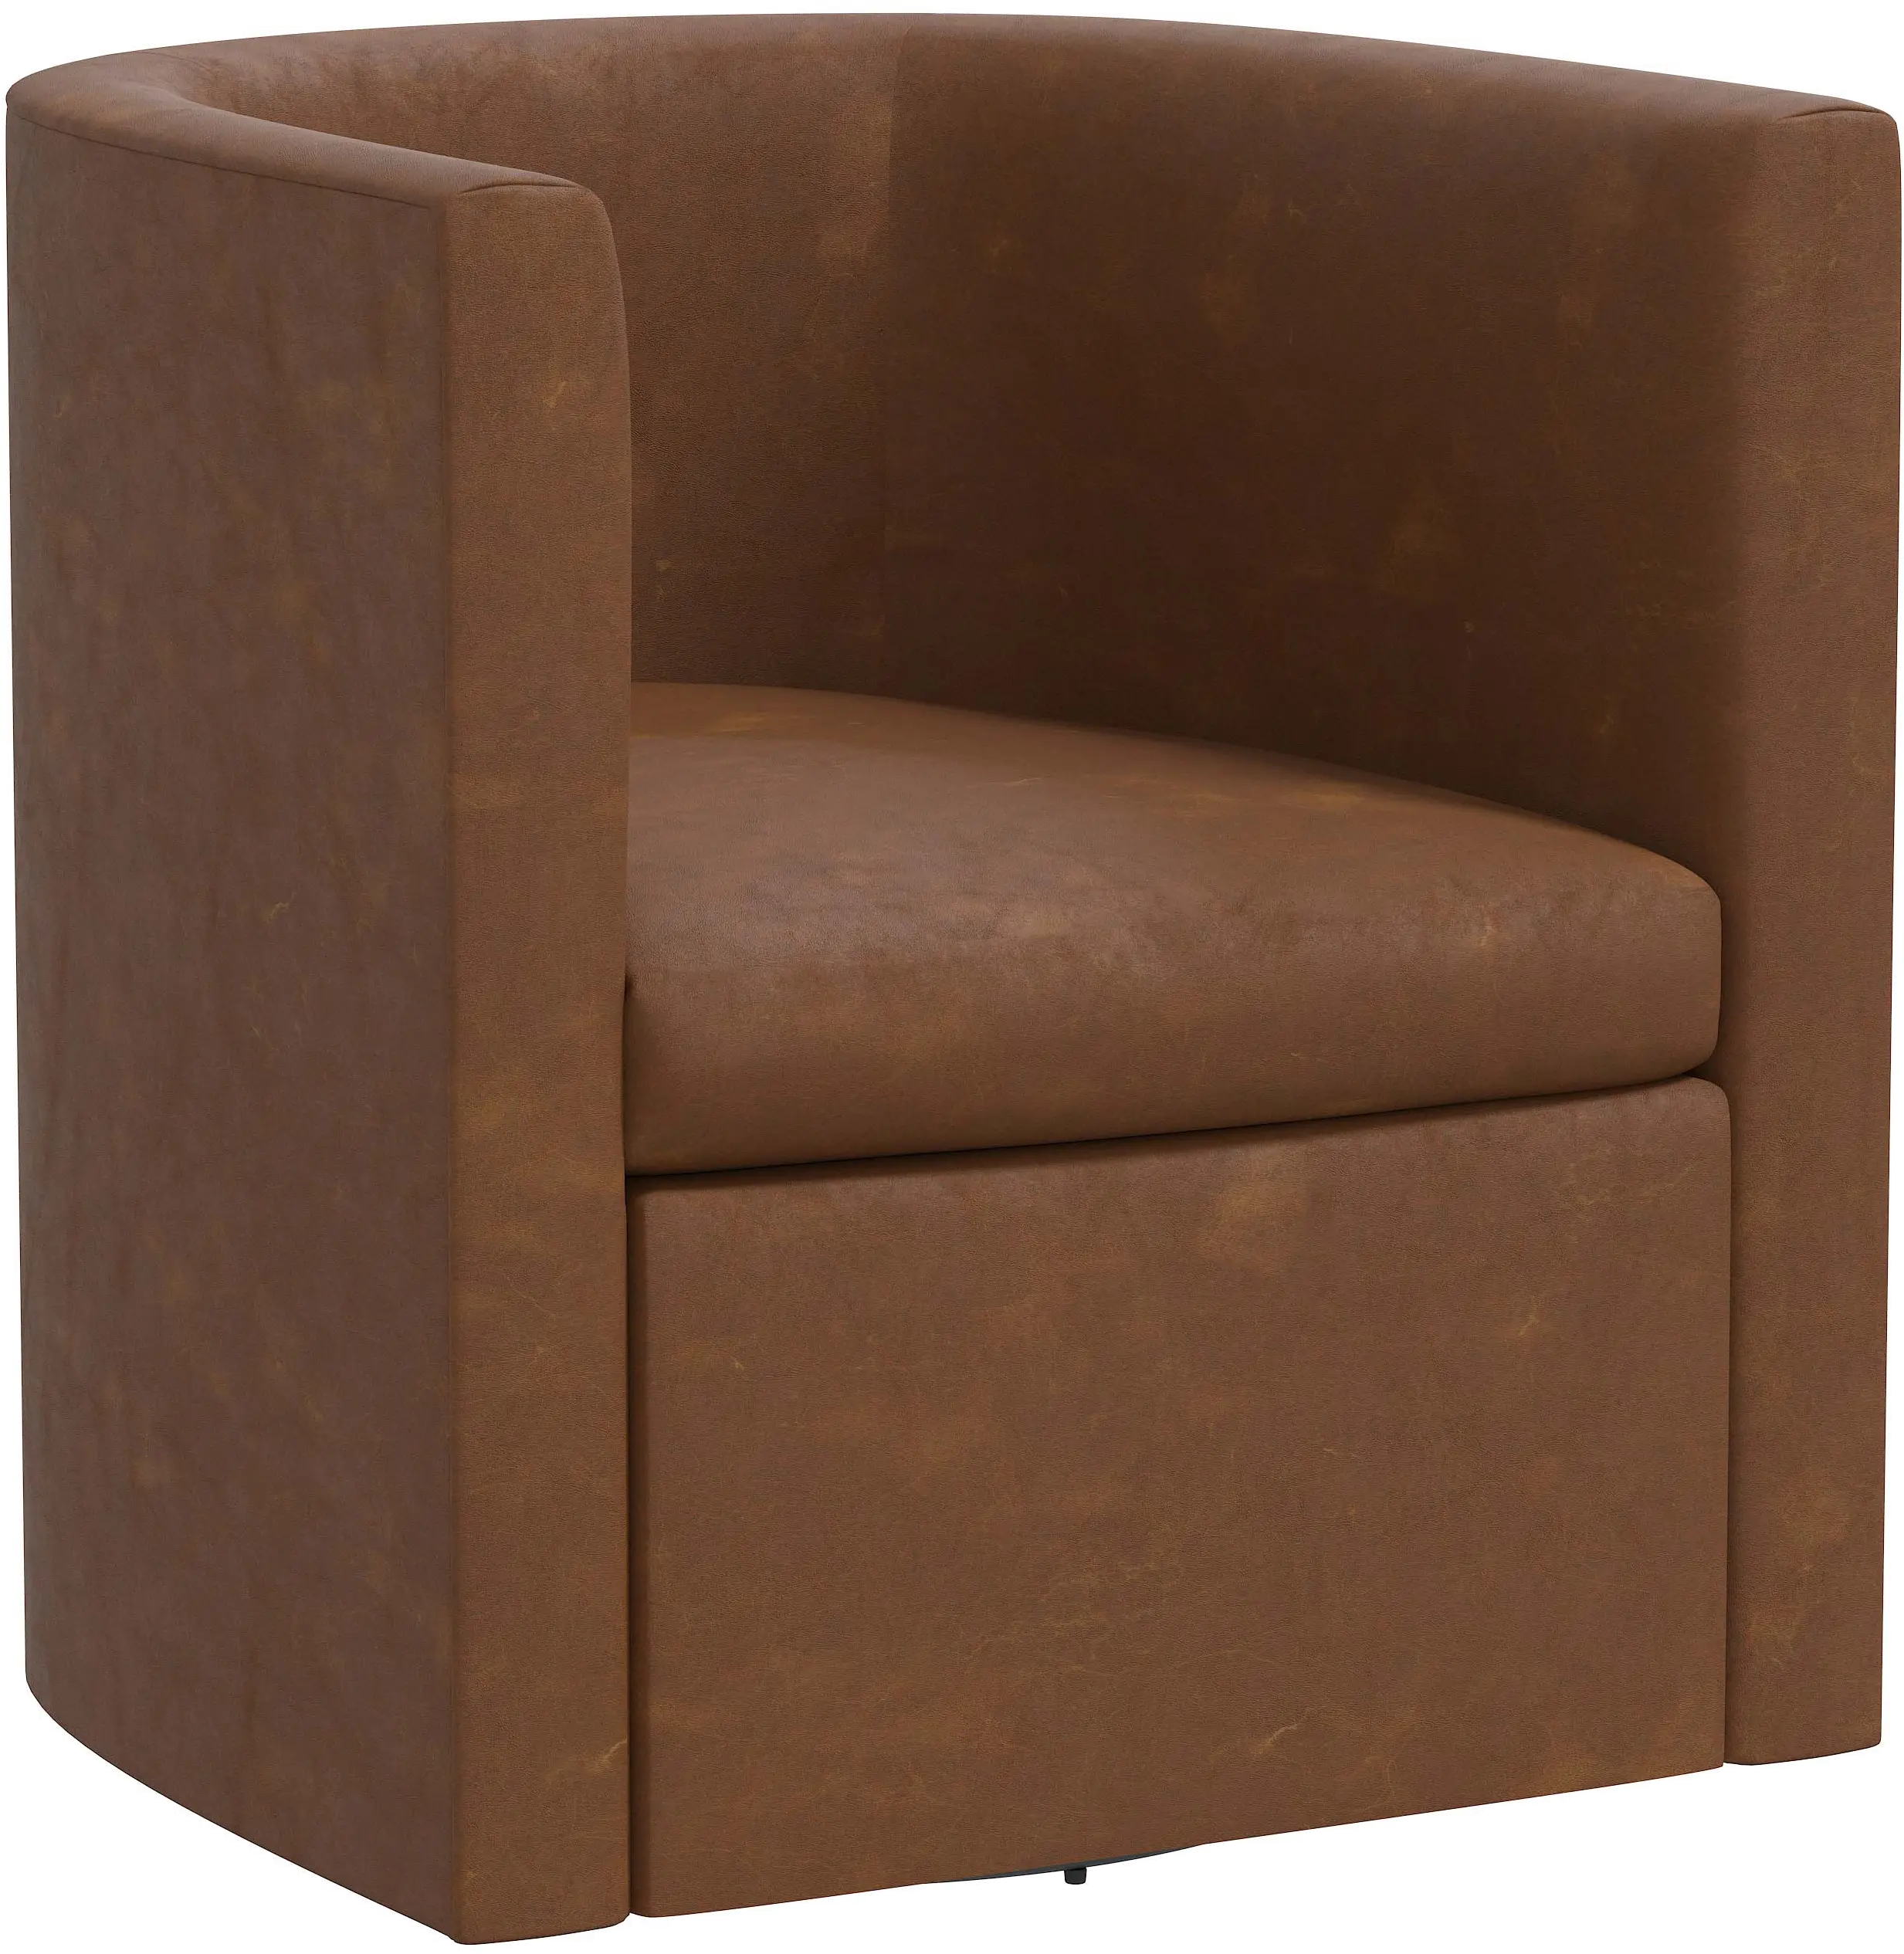 74-10SNRSDLBRW Sampson Brown Faux Leather Swivel Chair - Skyline  sku 74-10SNRSDLBRW